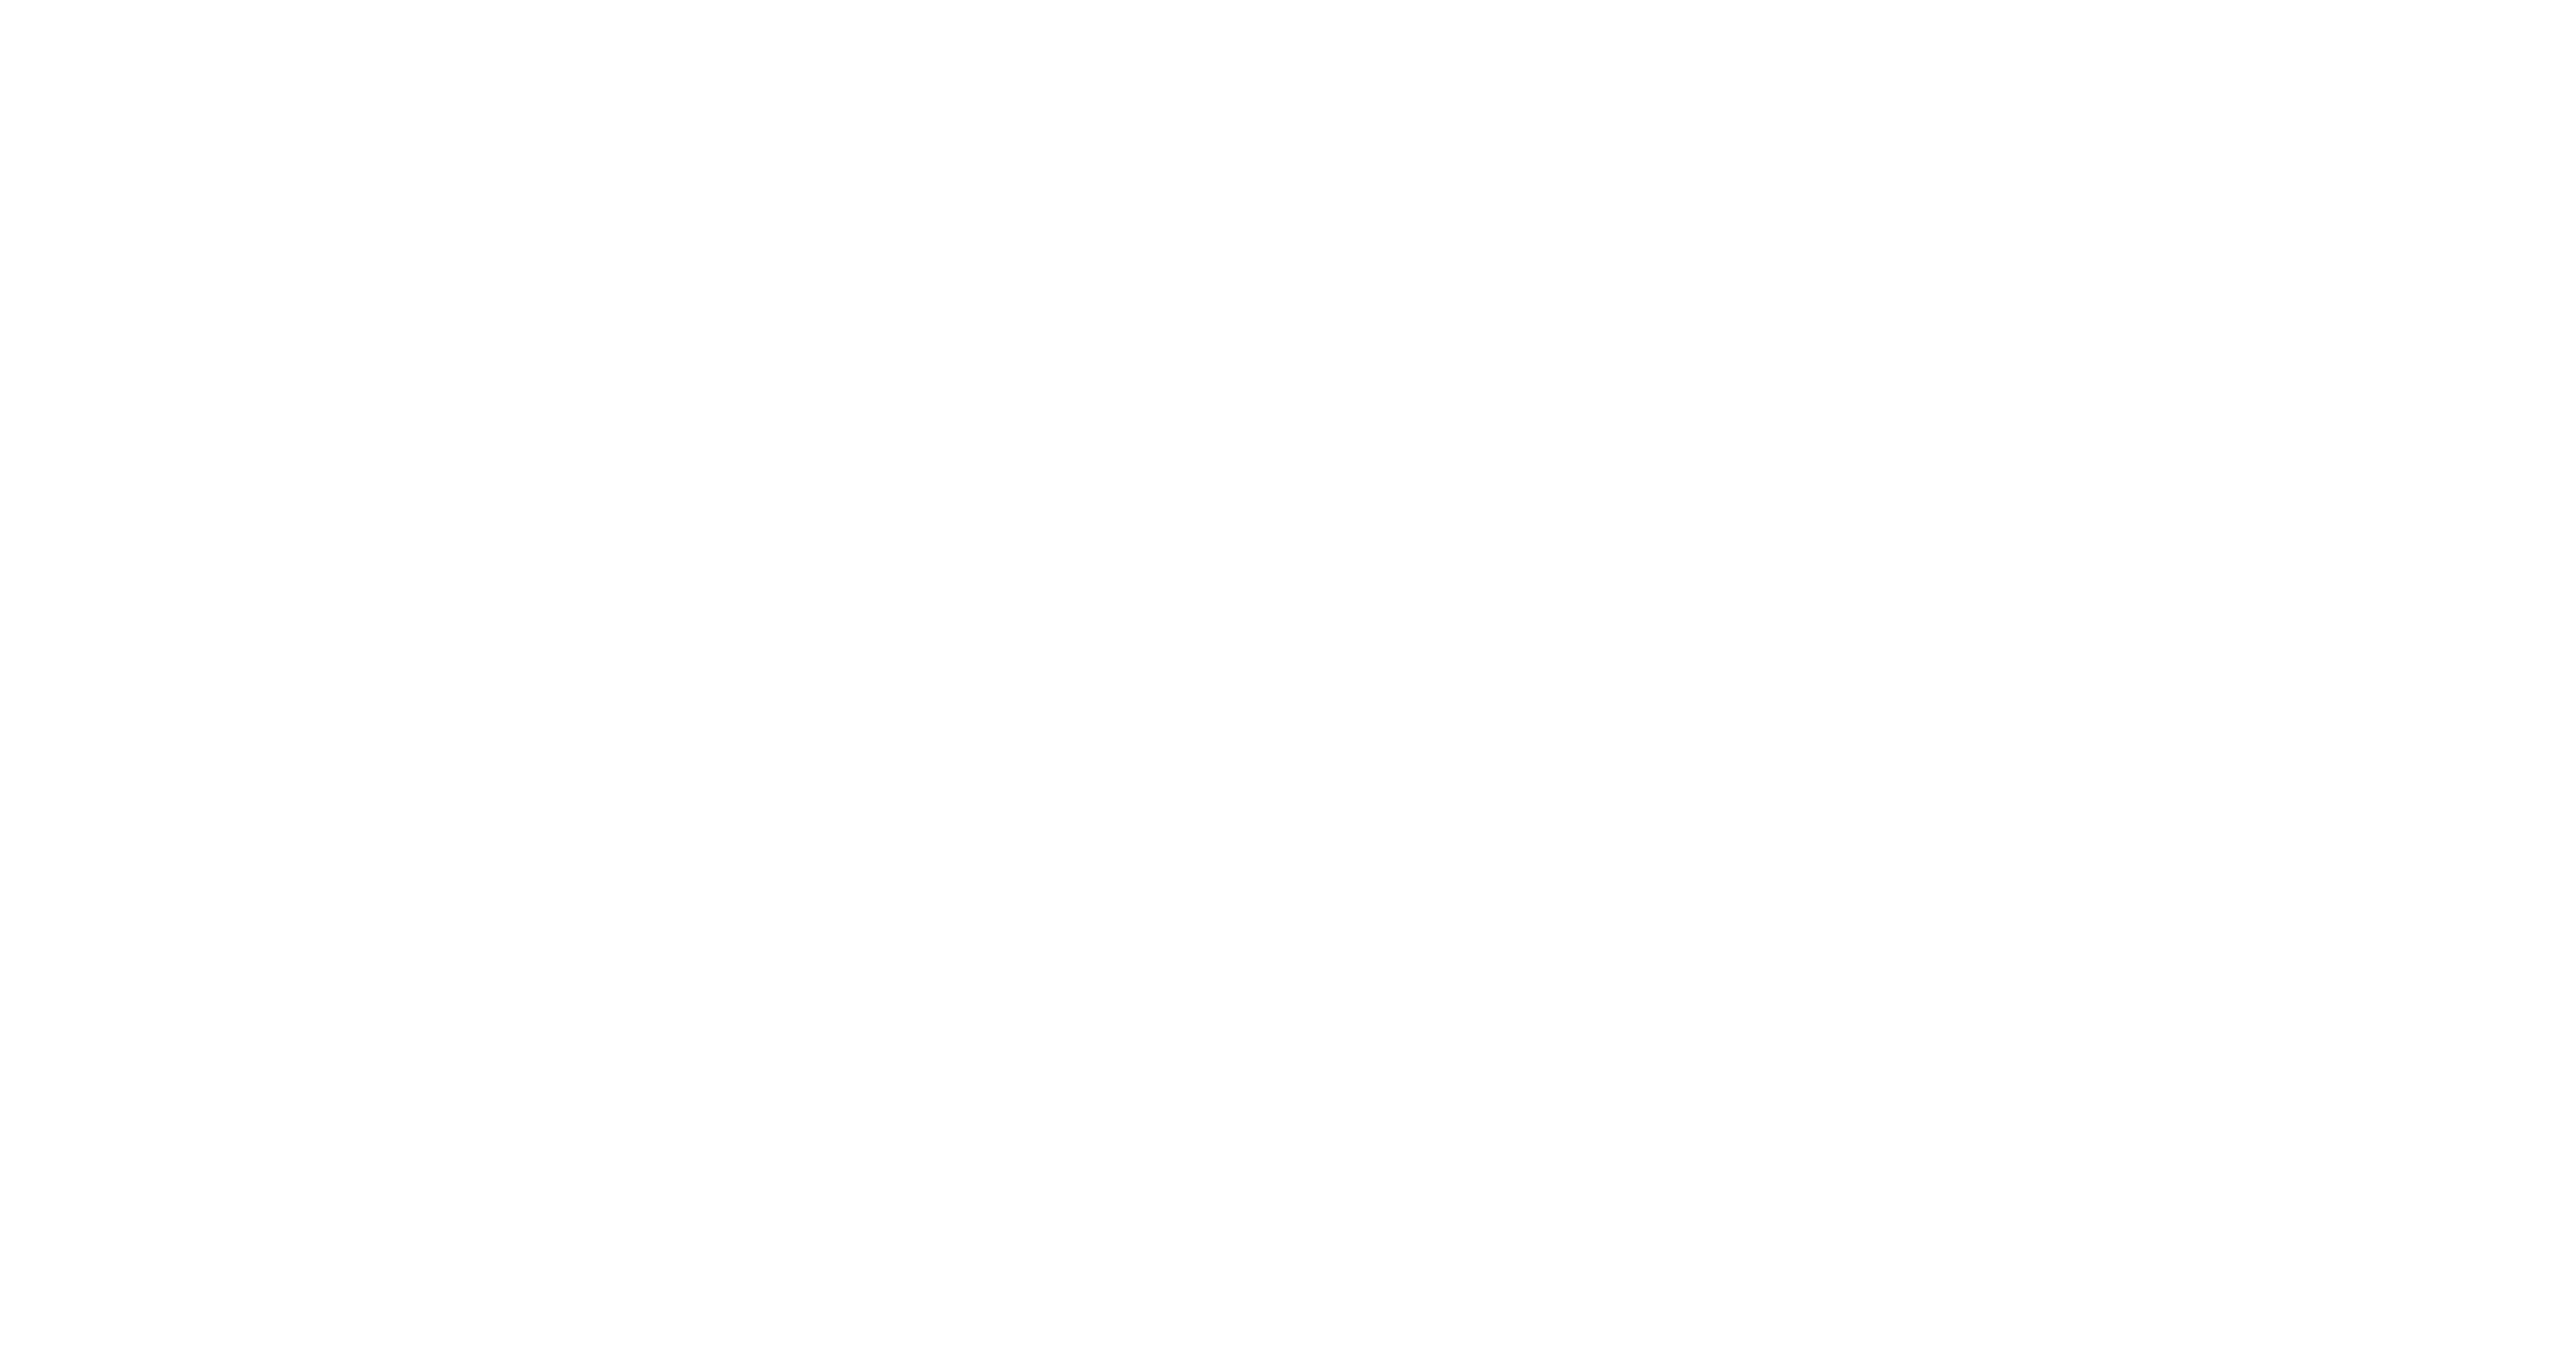 Evox Logo